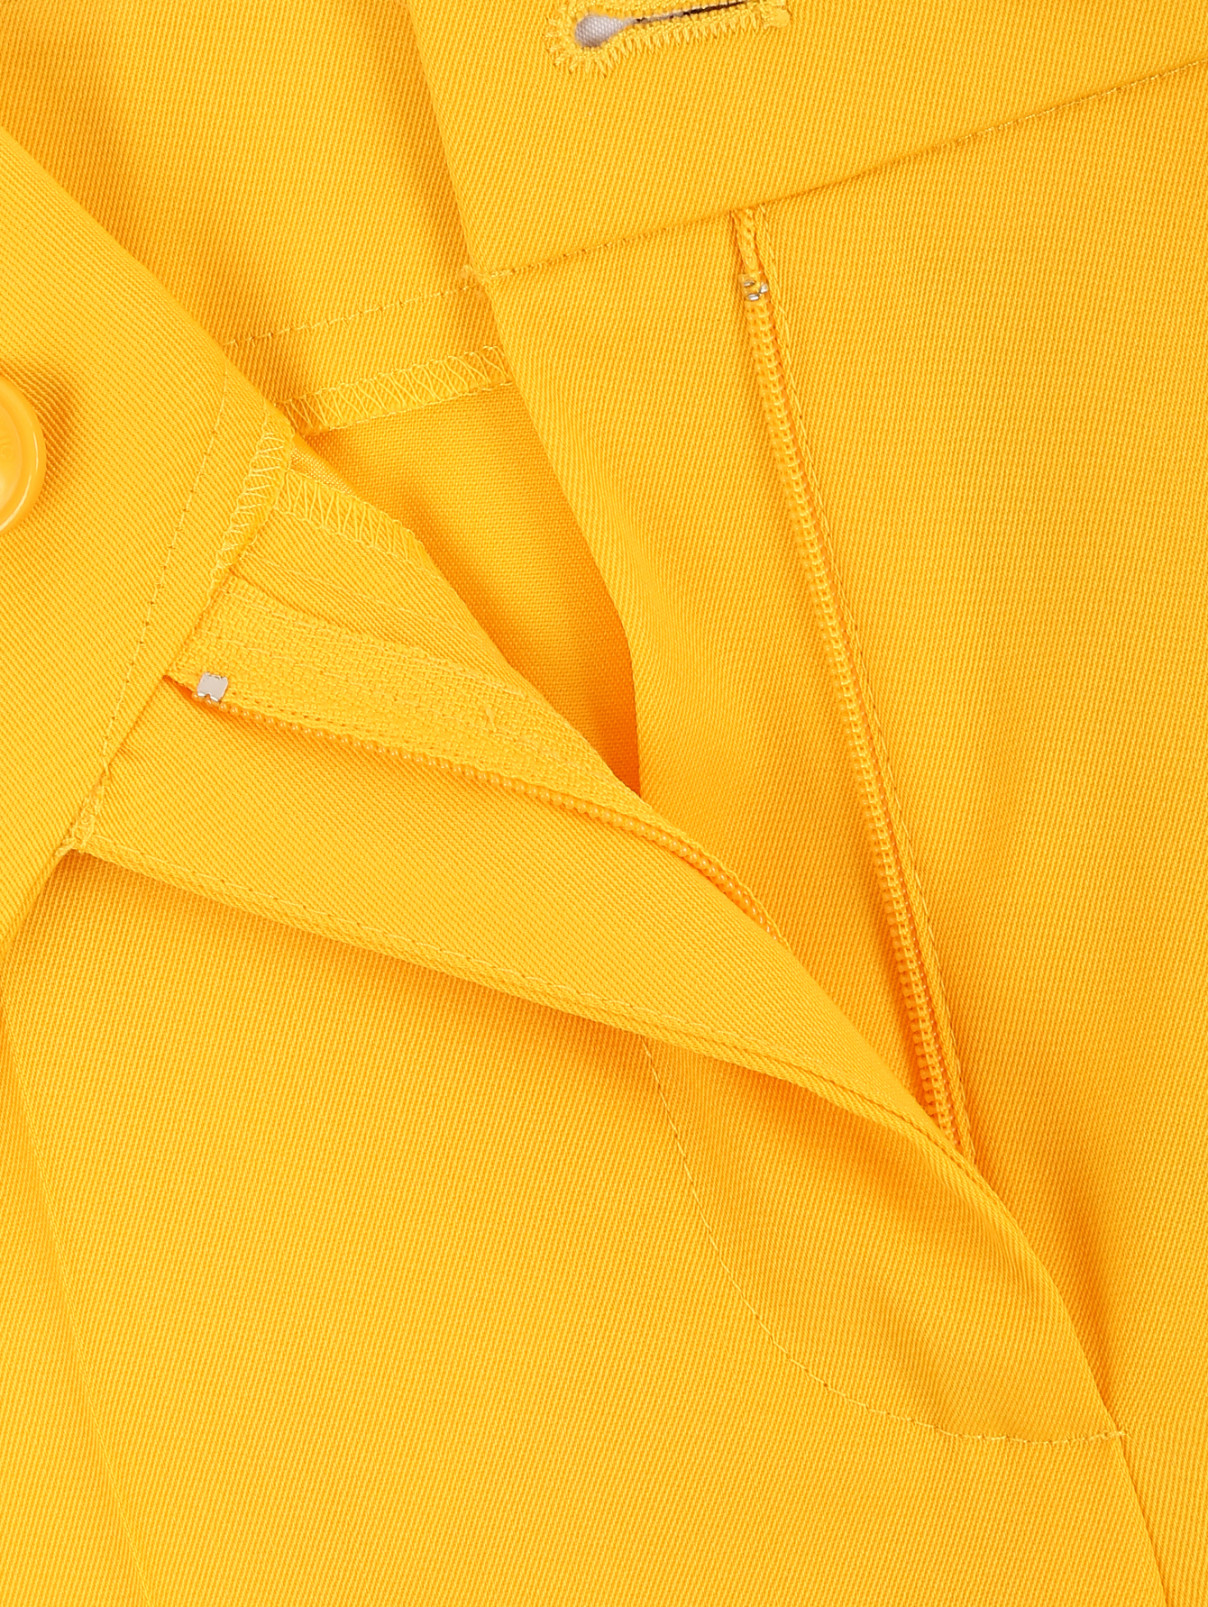 Брюки зауженного кроя из шерсти Moschino Cheap&Chic  –  Деталь1  – Цвет:  Желтый